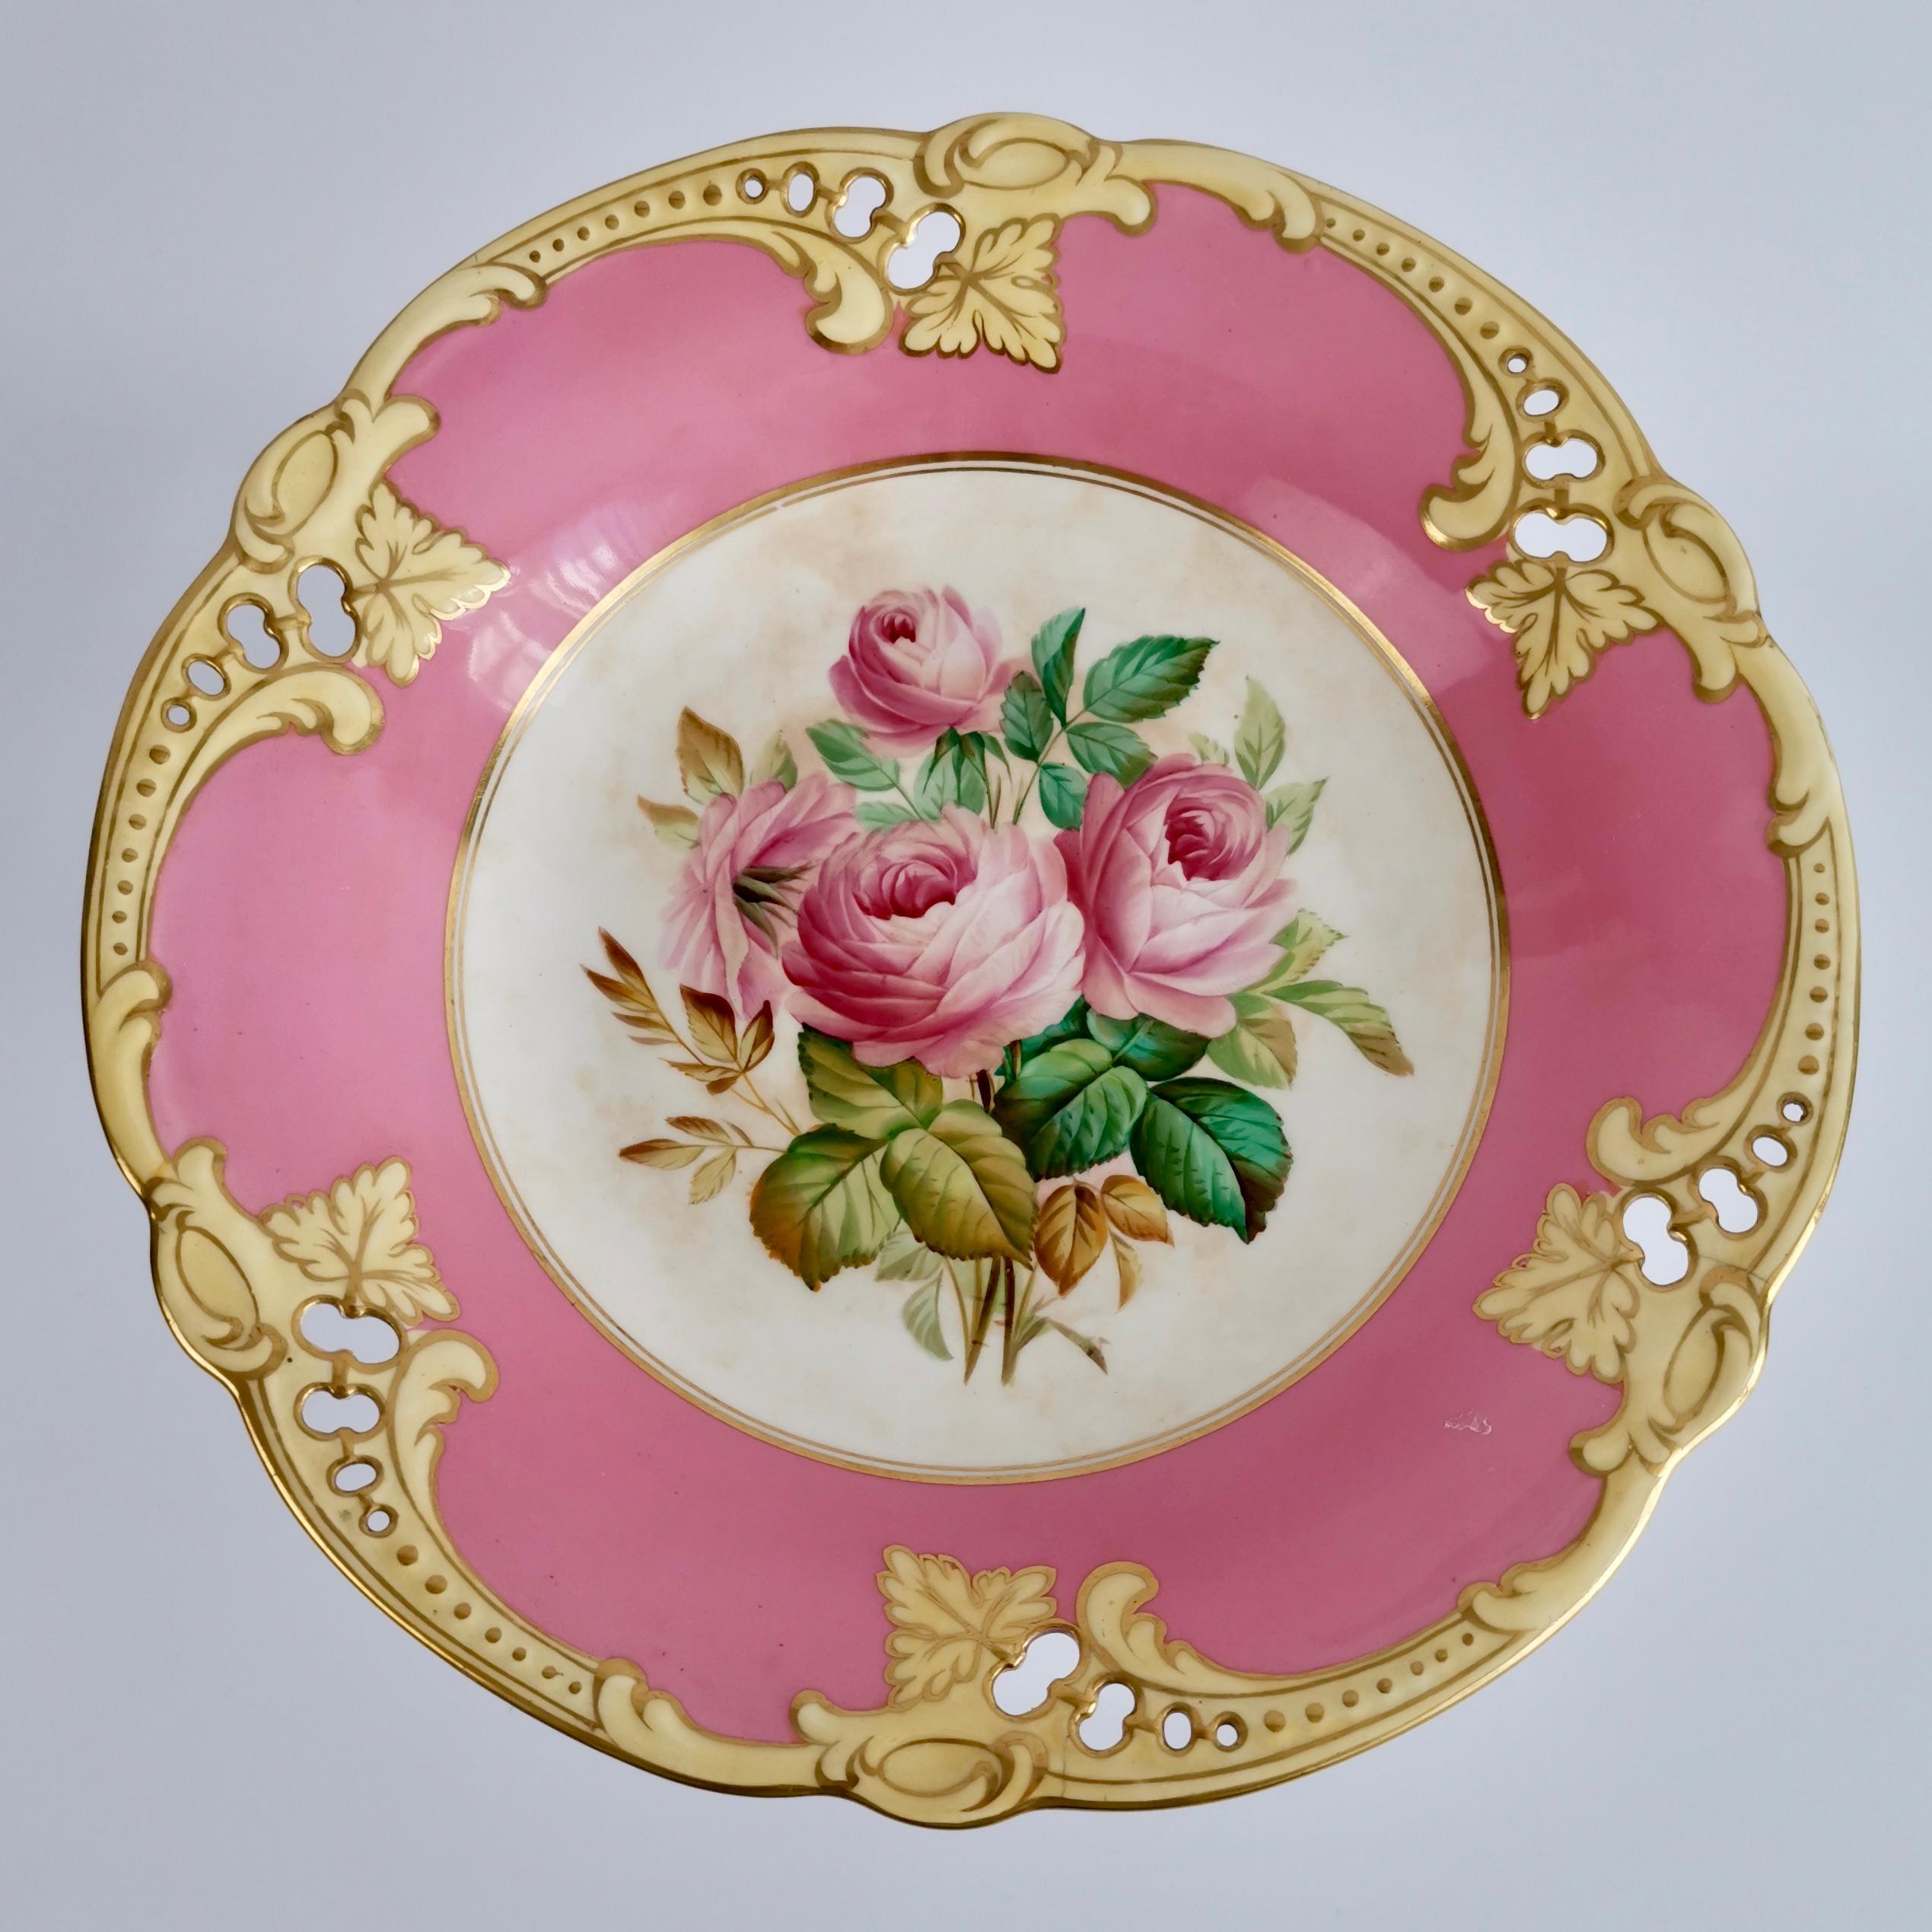 Brown Westhead & Moore Porcelain Dessert Service, Hot Pink Botanical, circa 1860 8